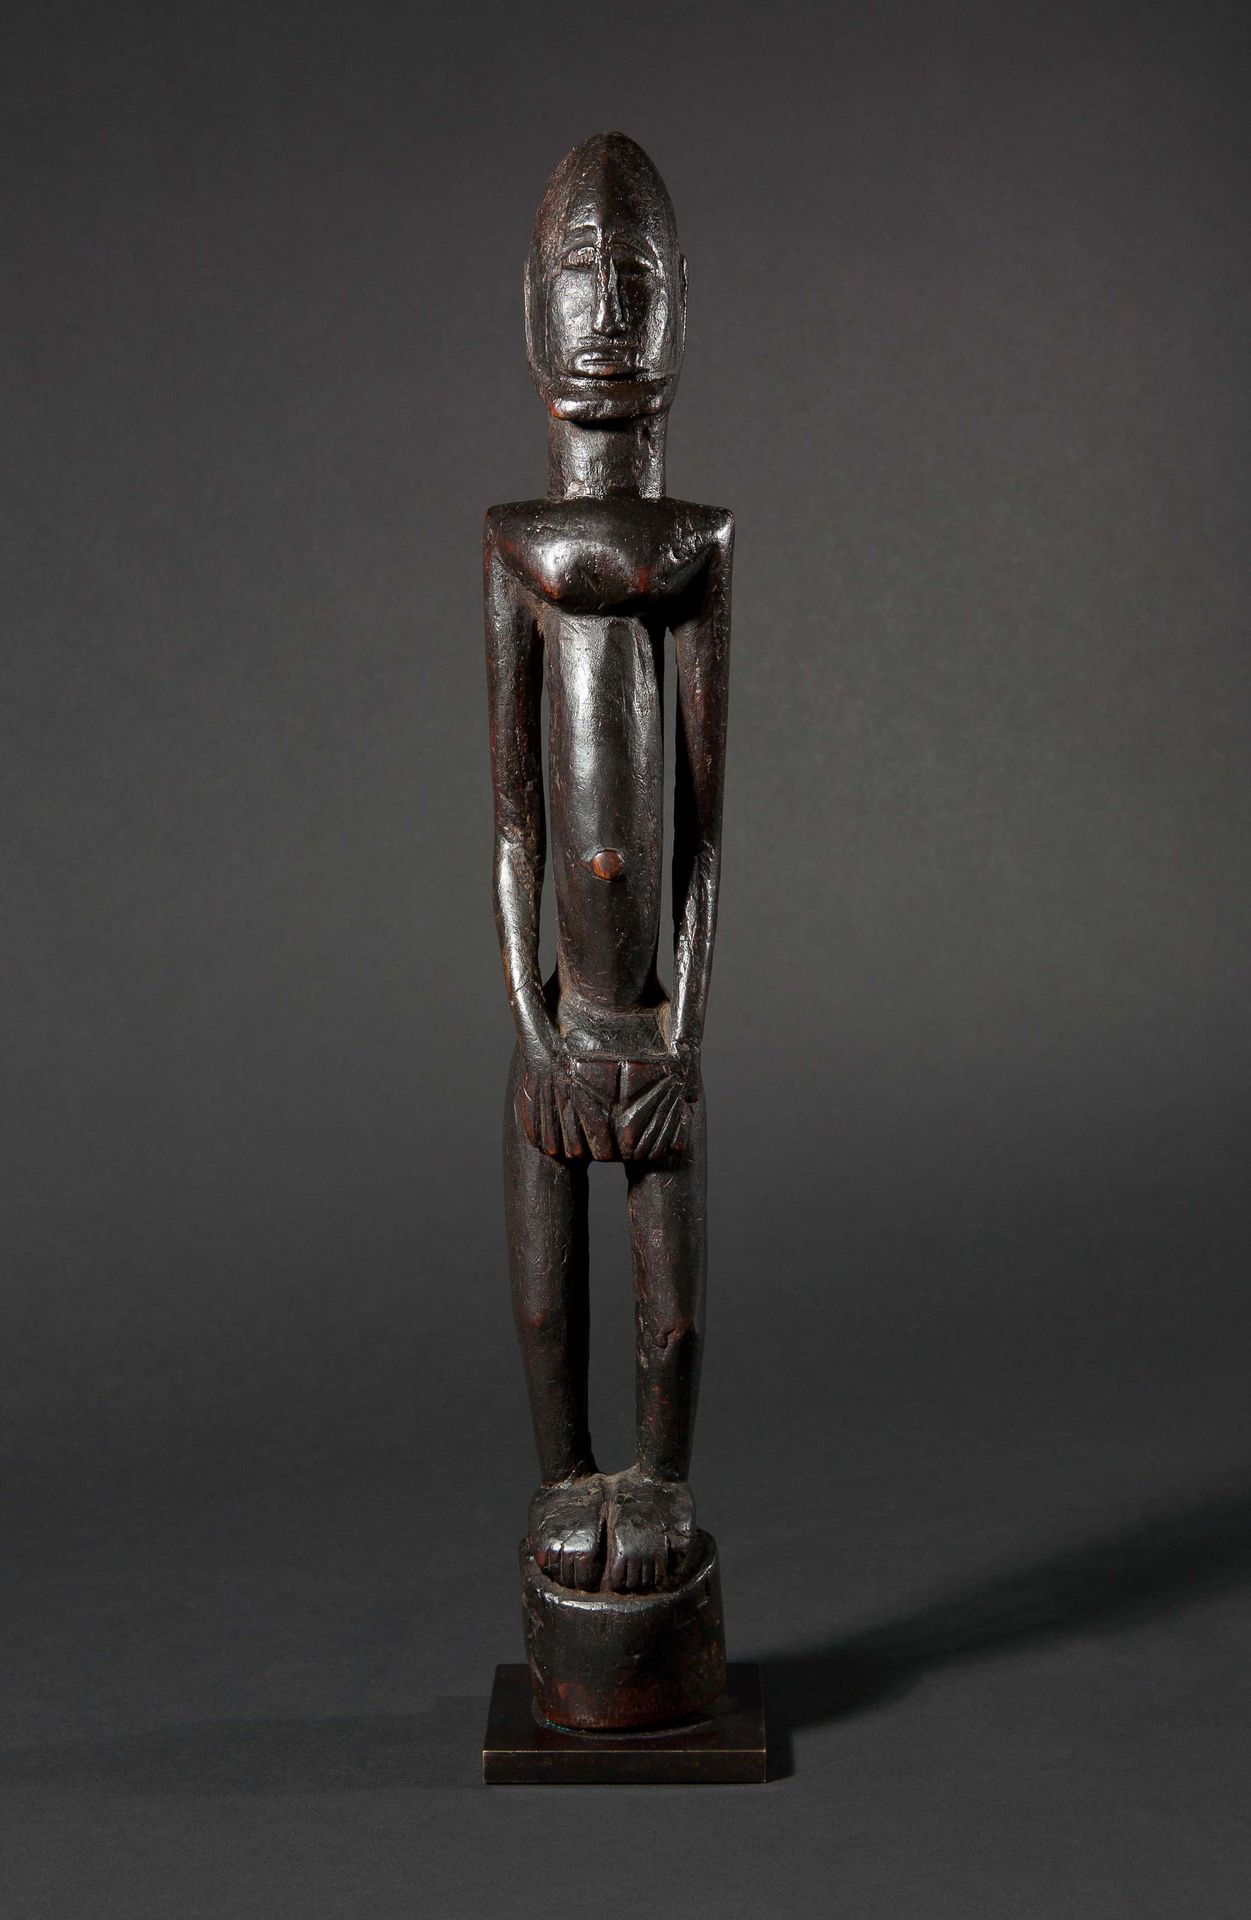 Null 雌雄同体的祖先的硬木雕像，有古老的棕色和红色铜锈，有些地方有光泽。他的双手放在下腹部，以示象征性的姿态。他站在一个圆形的基座上，他的脸有一个美丽的层次&hellip;